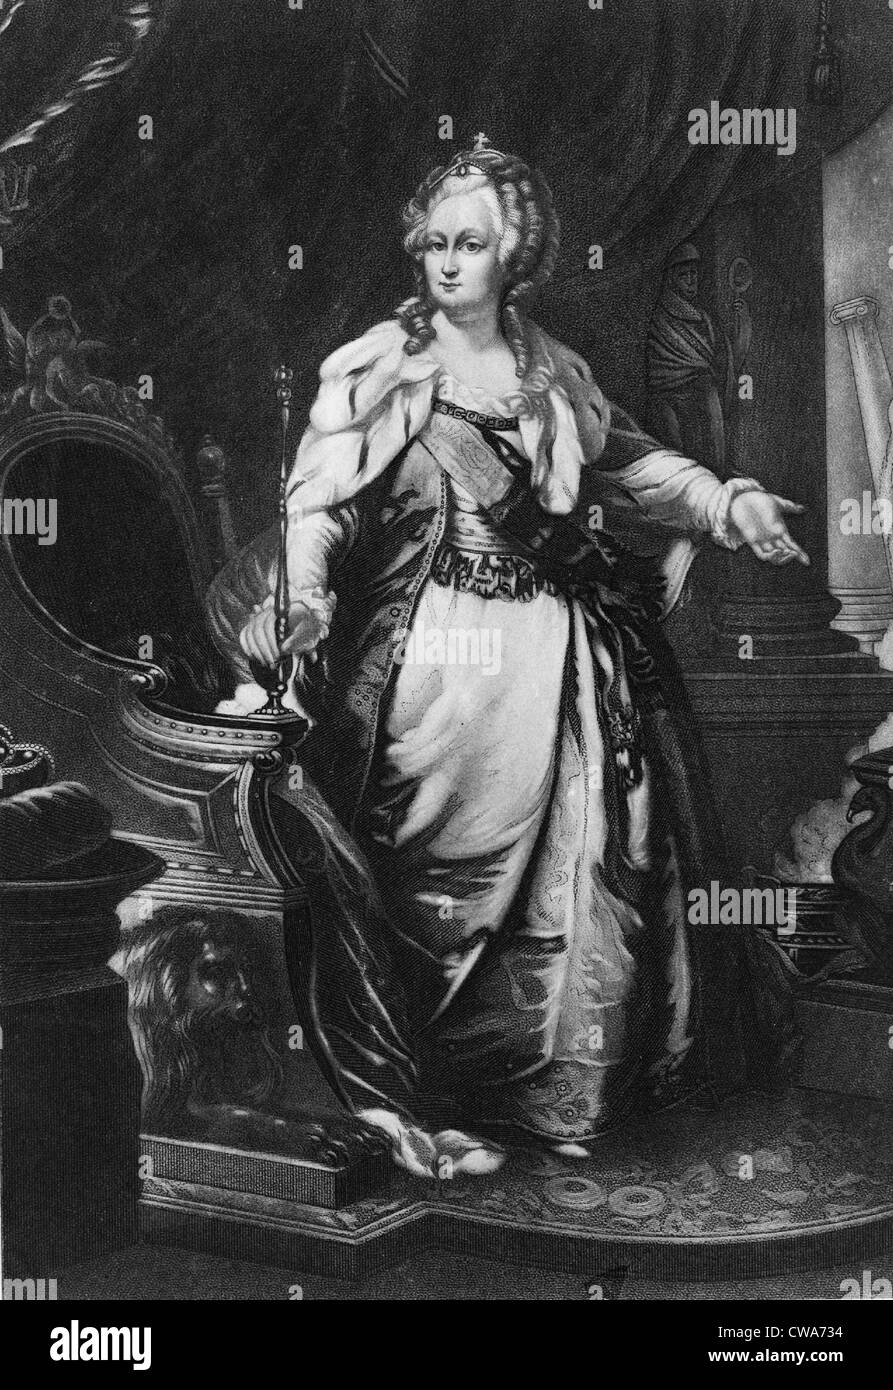 Katharina II., Kaiserin von Russland, Porträt (1729-1796). 19. Jahrhundert Gravur von Malerei des 18. Jahrhunderts. Stockfoto